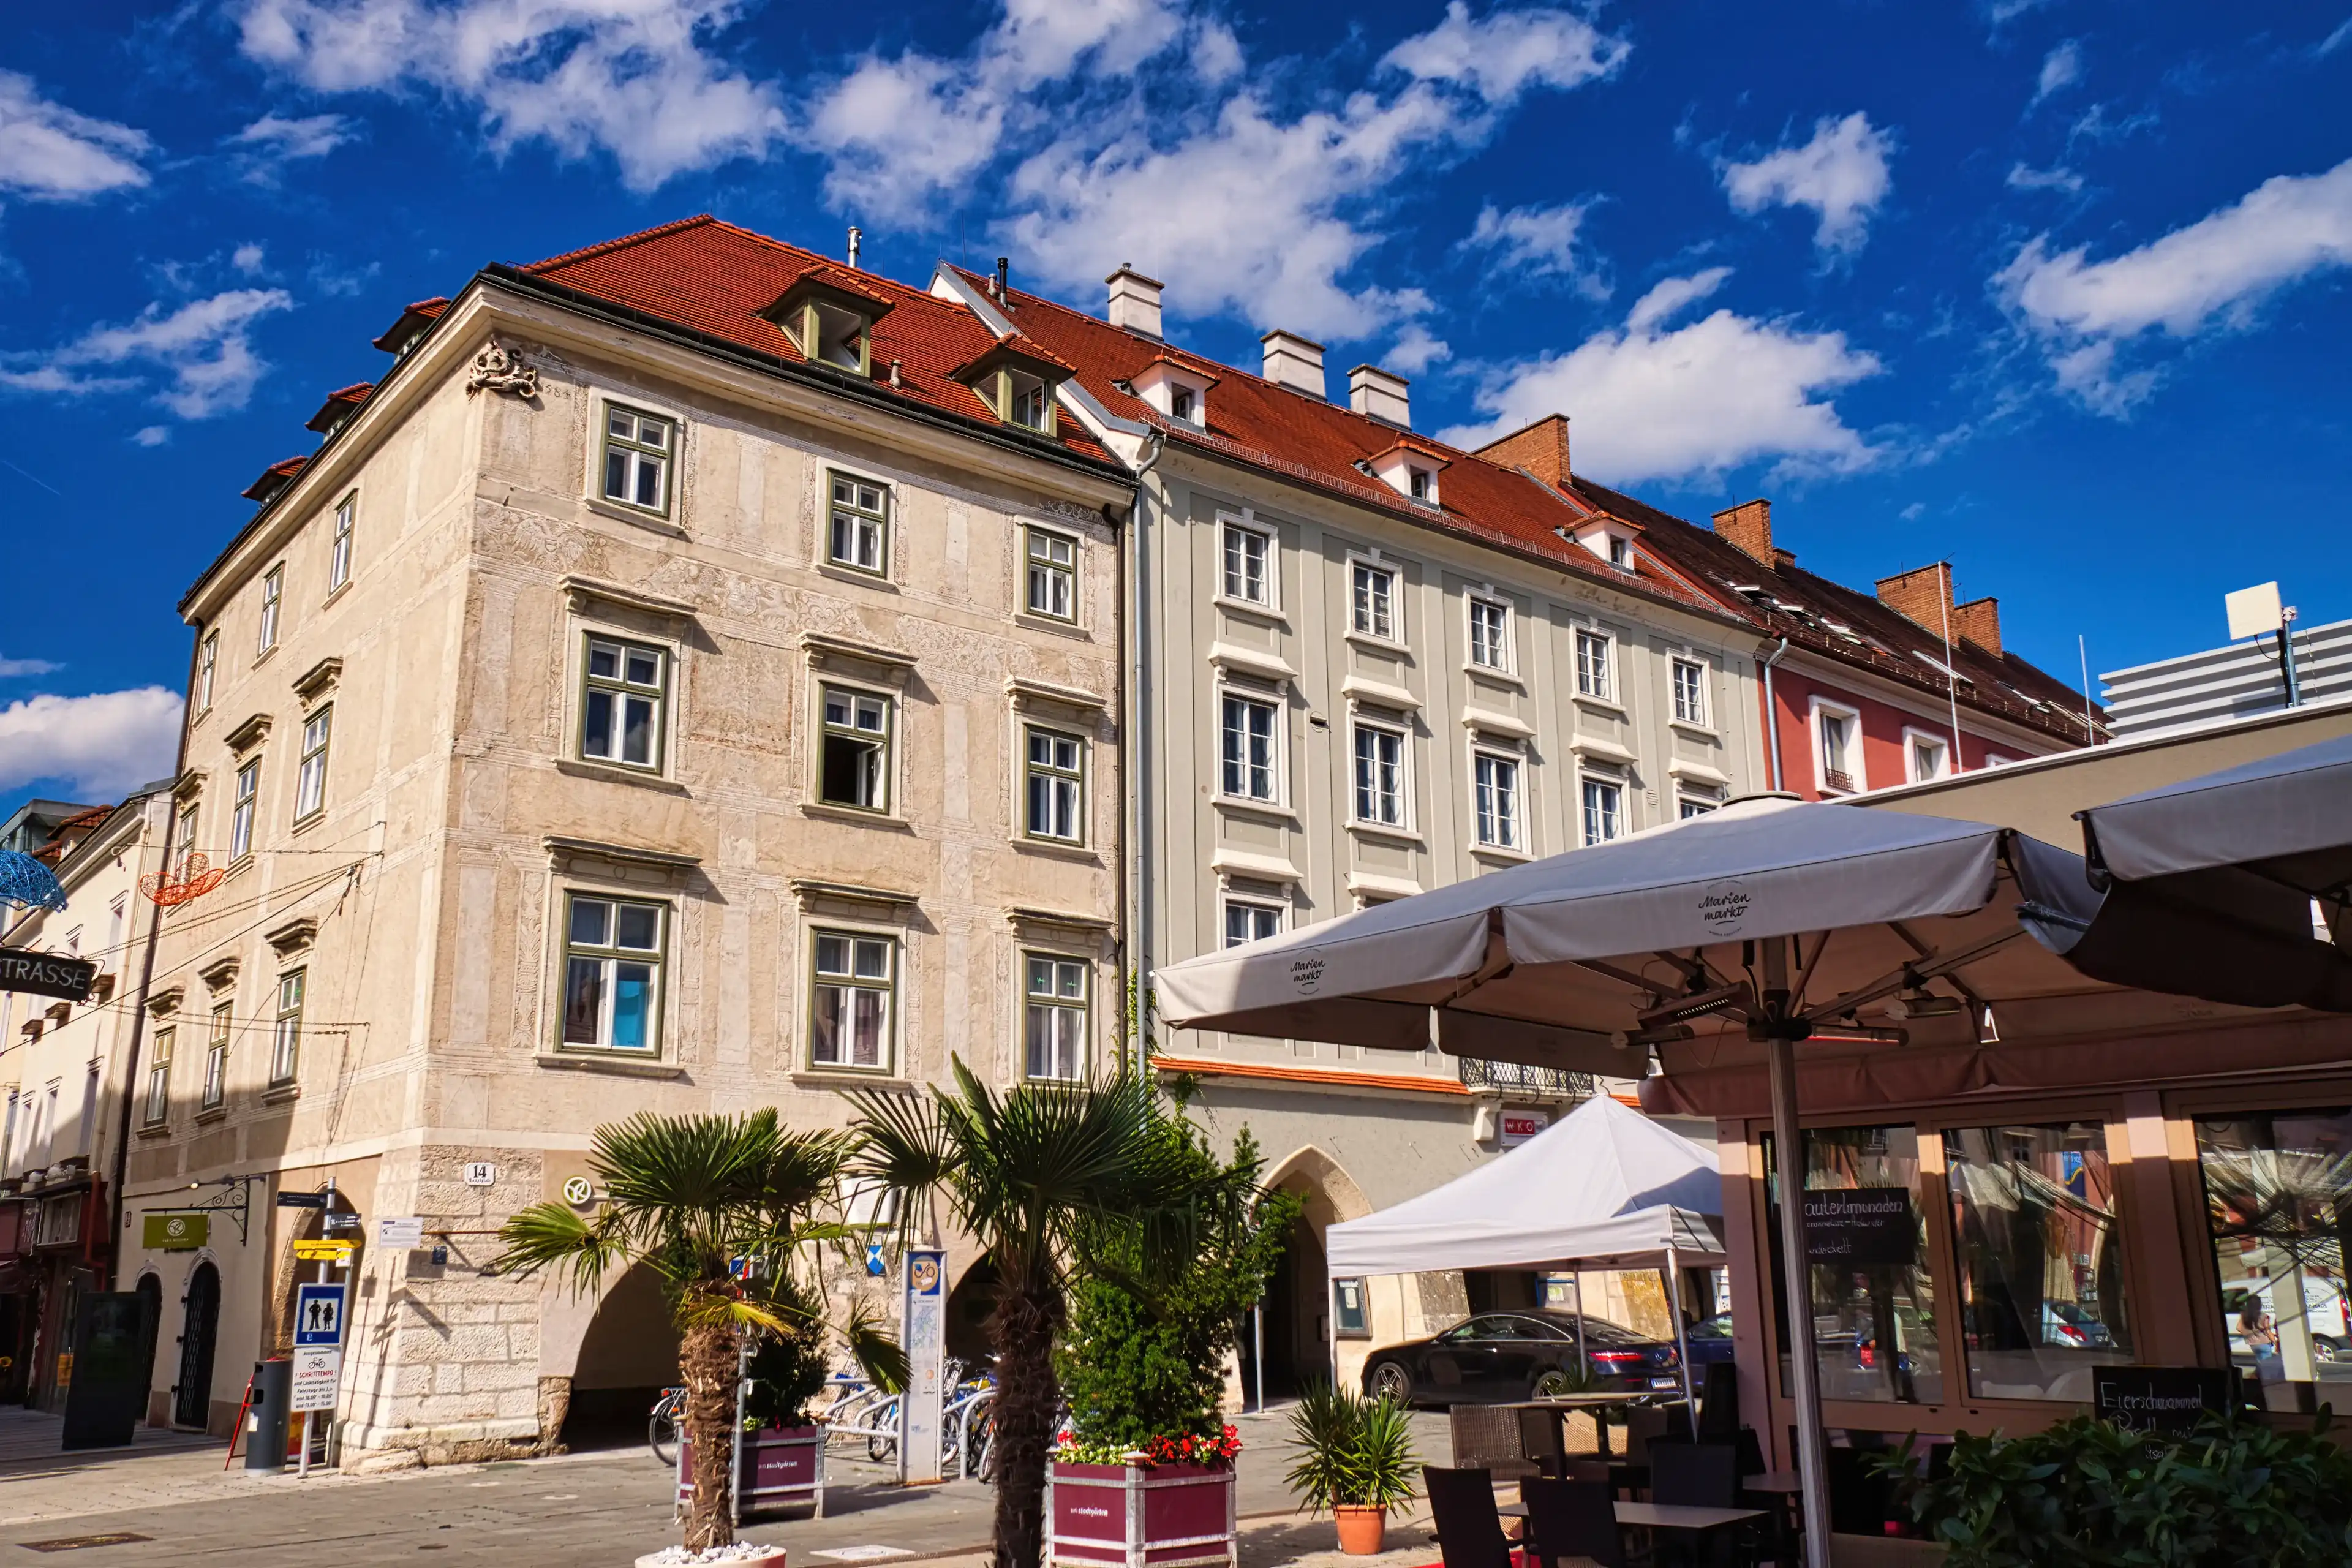 Best Wiener Neustadt hotels. Cheap hotels in Wiener Neustadt, Austria